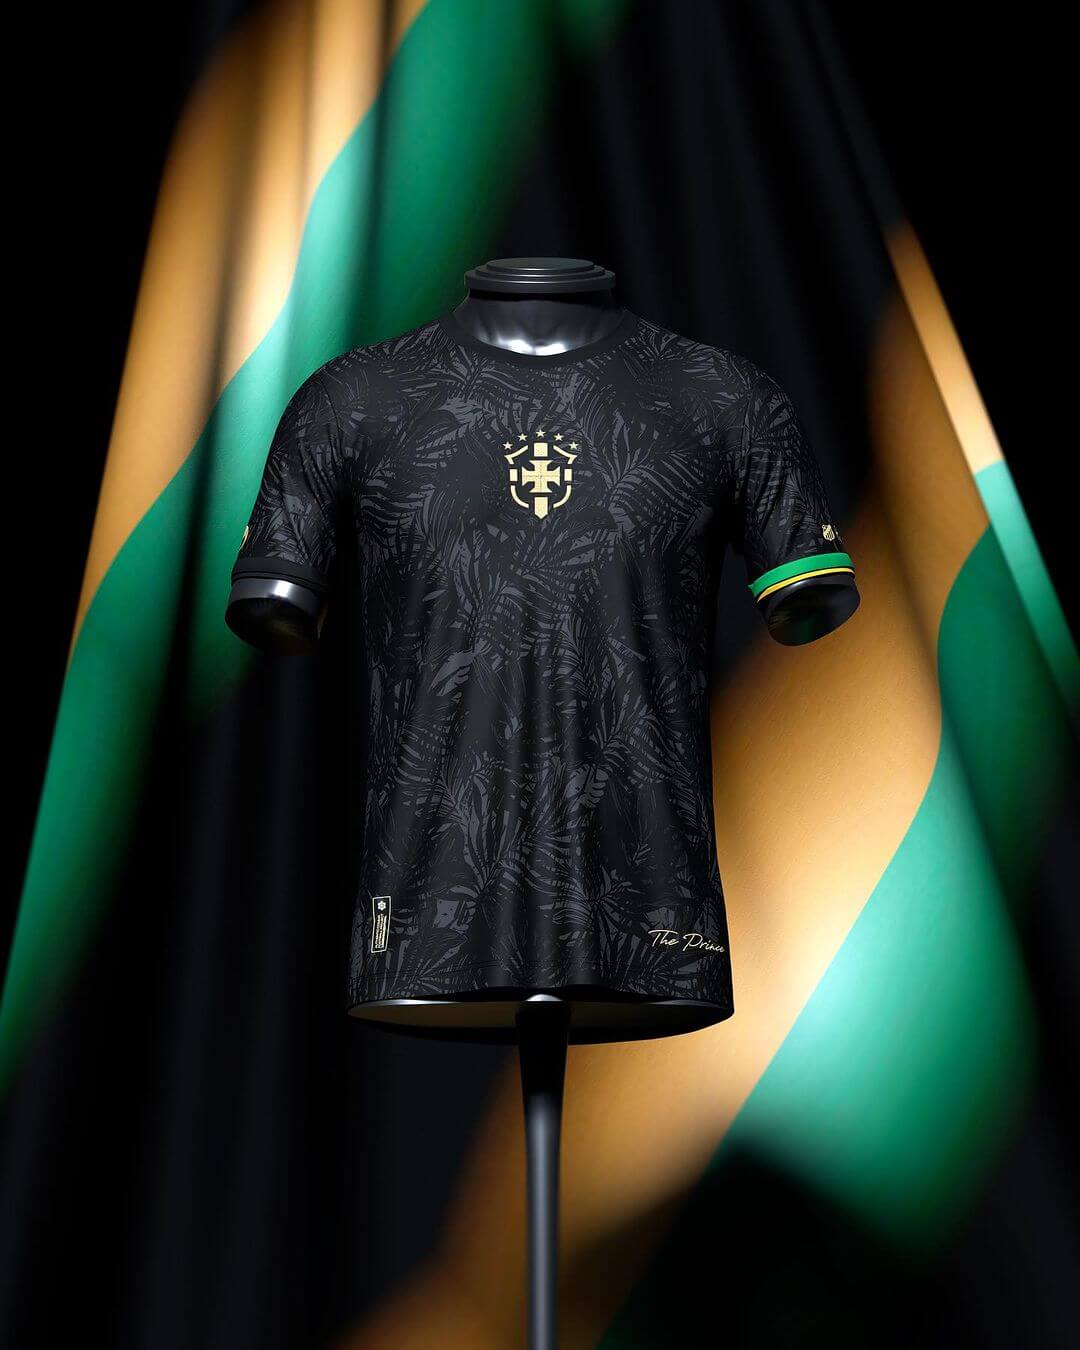 Camisa brasil preta